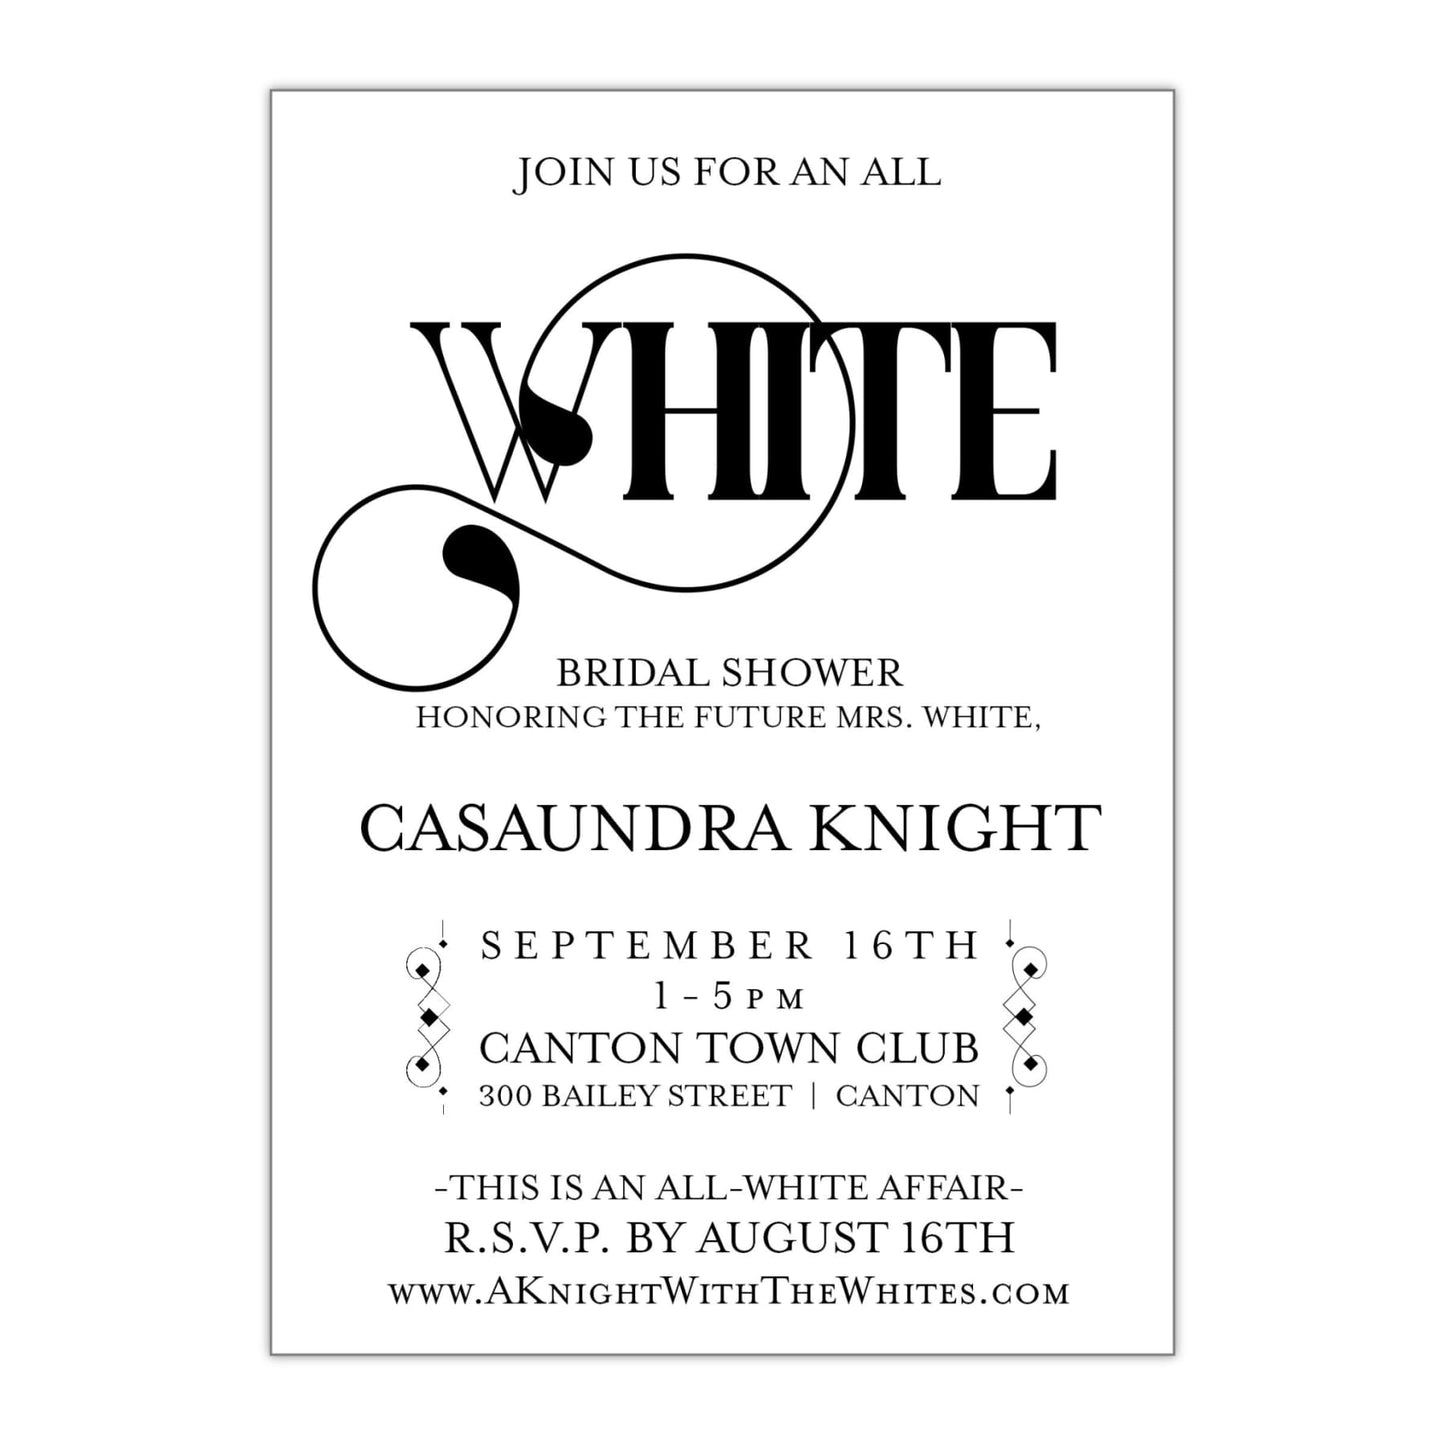 All White Party Bridal Shower Invitation - All That Glitters Invitations